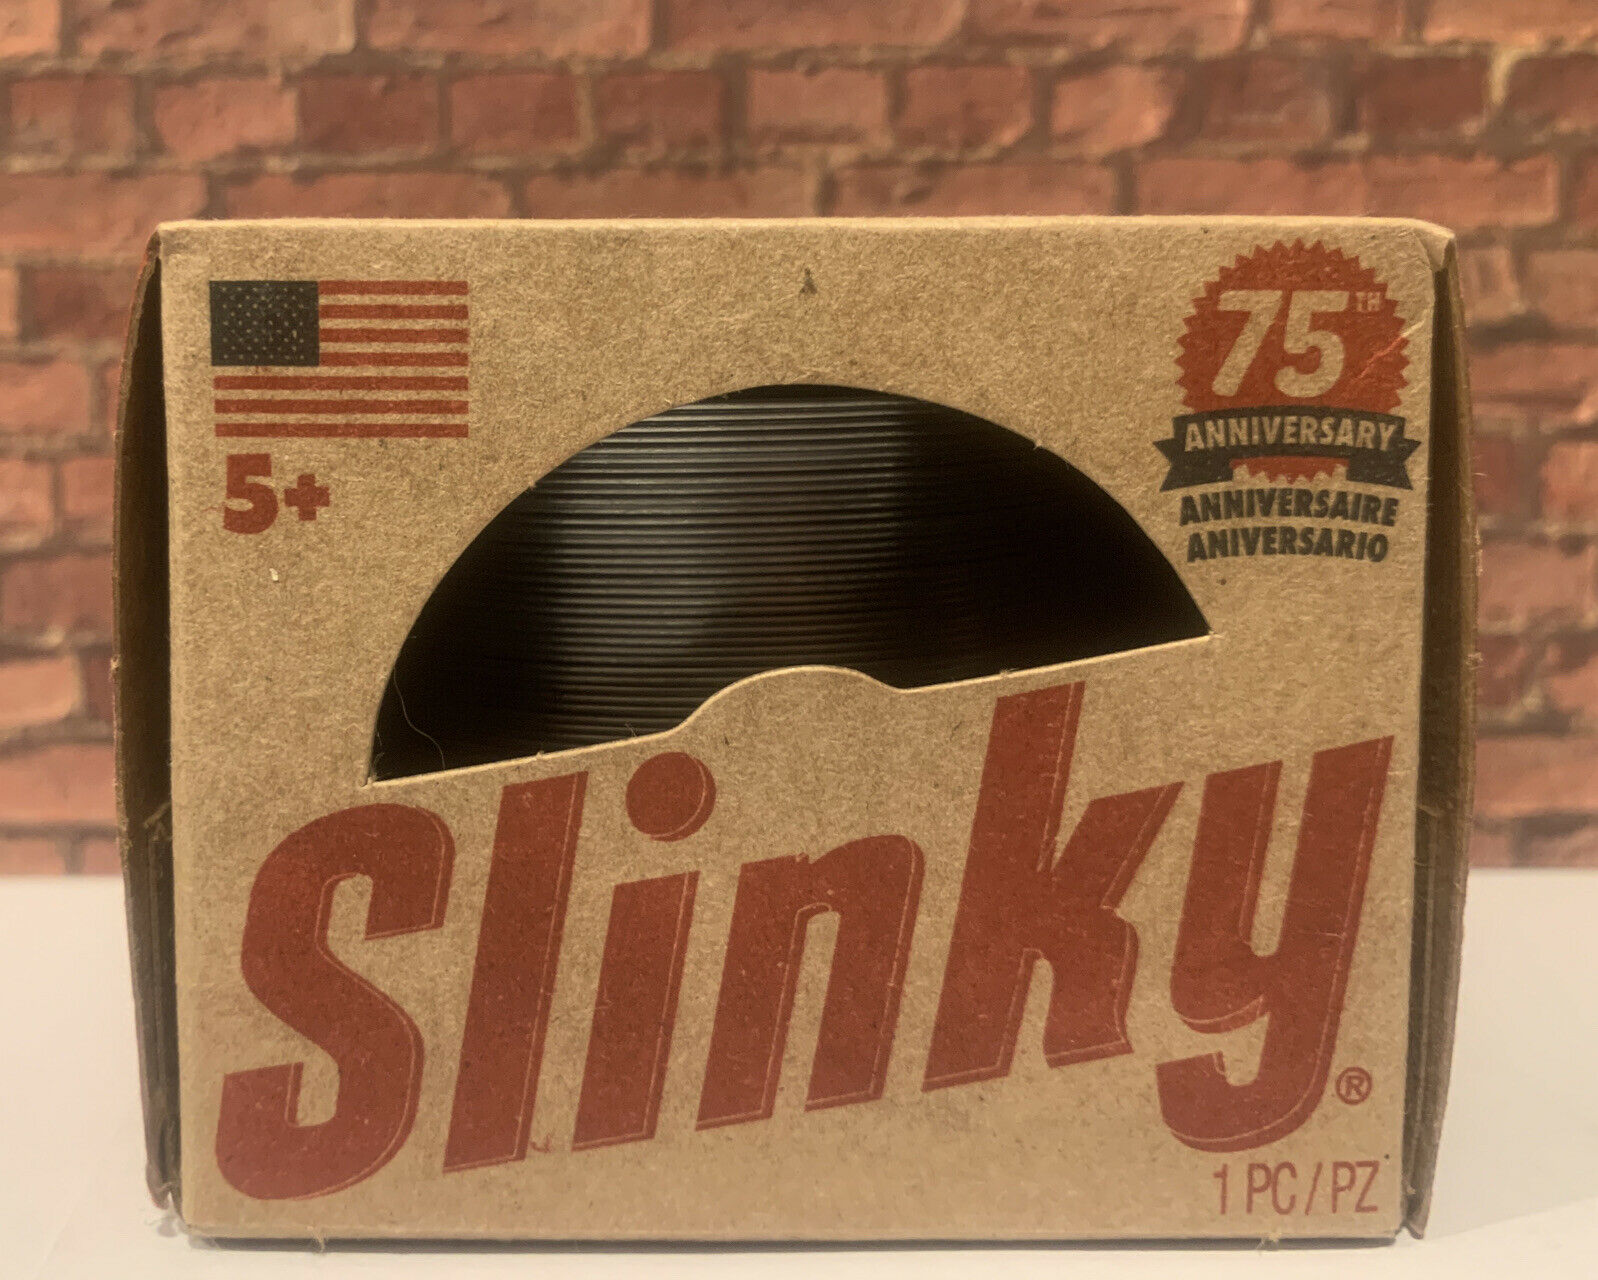 75th Anniversary Metal Slinky Original Brand New! 1 Day Handling,quick Shipping!